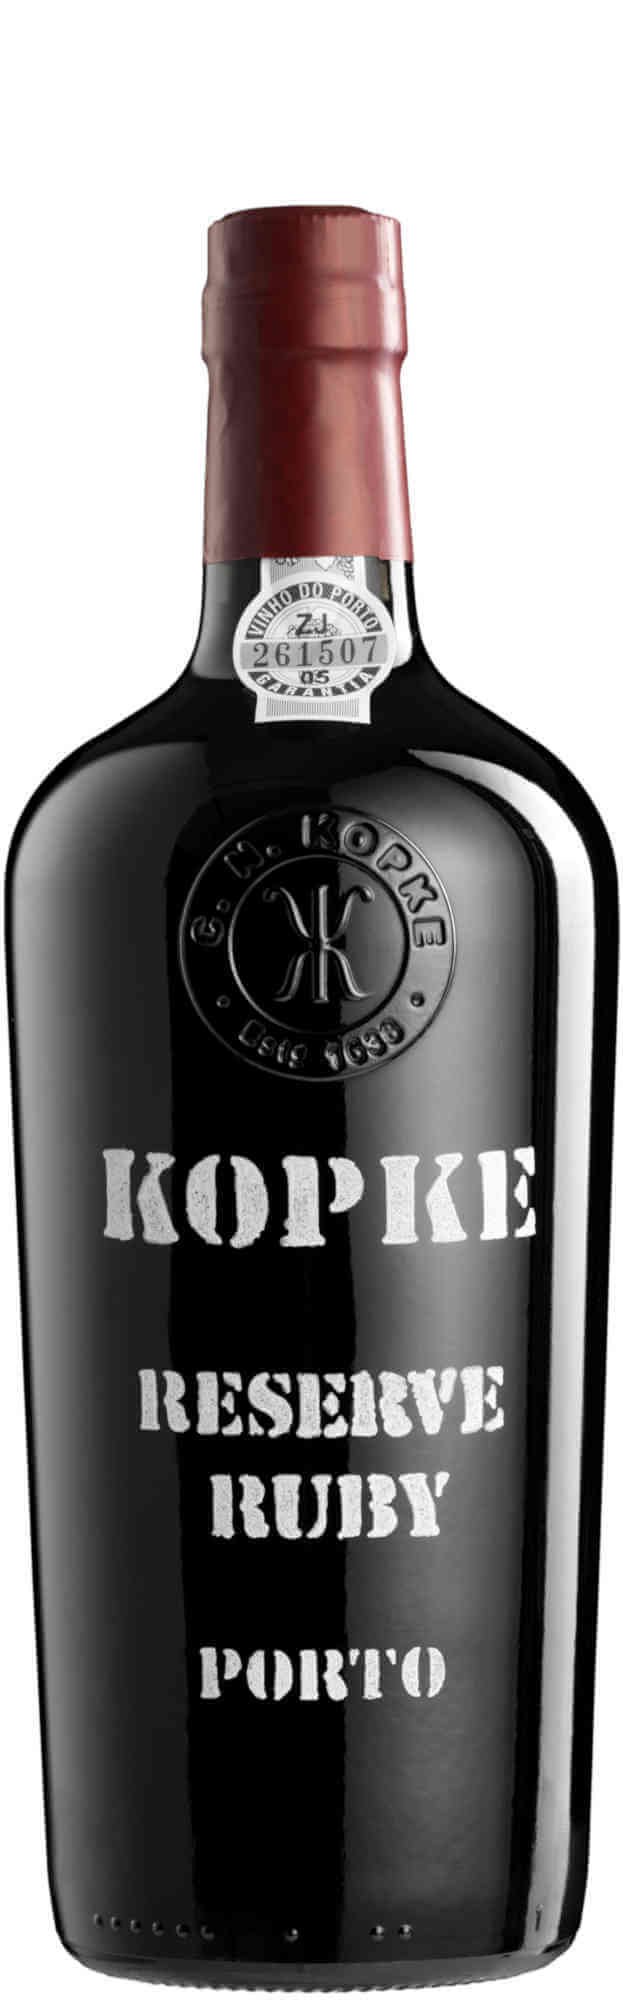 Kopke-Ruby-Reserve-Port